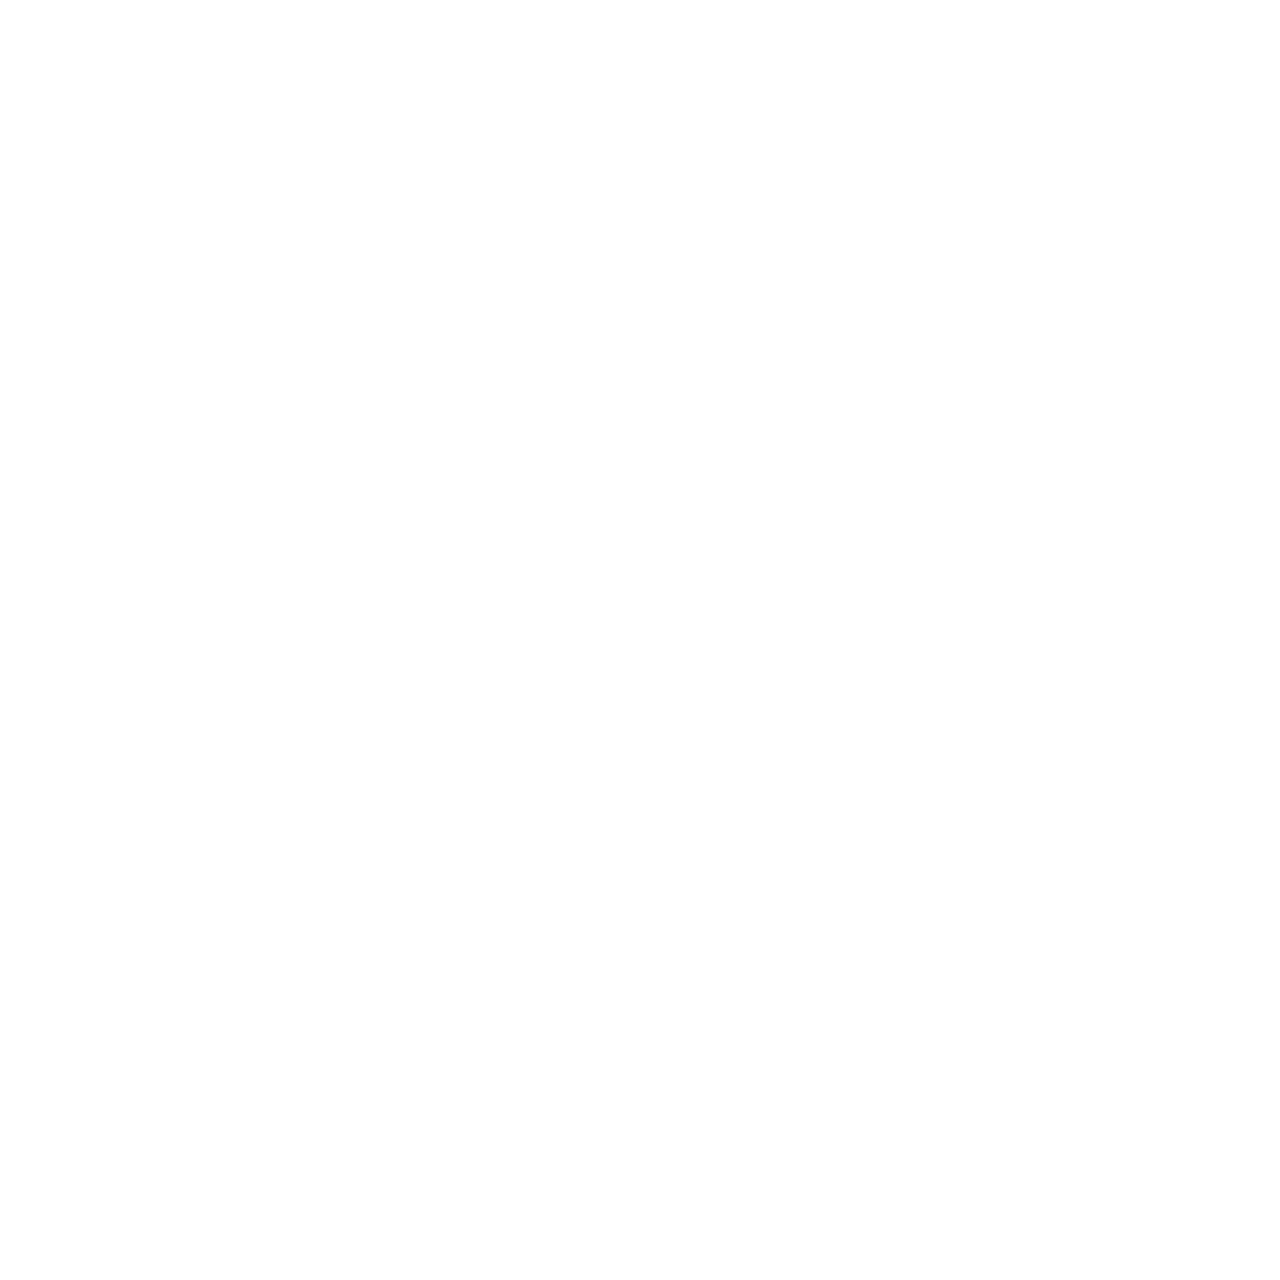 Royal Enfield : Brand Short Description Type Here.